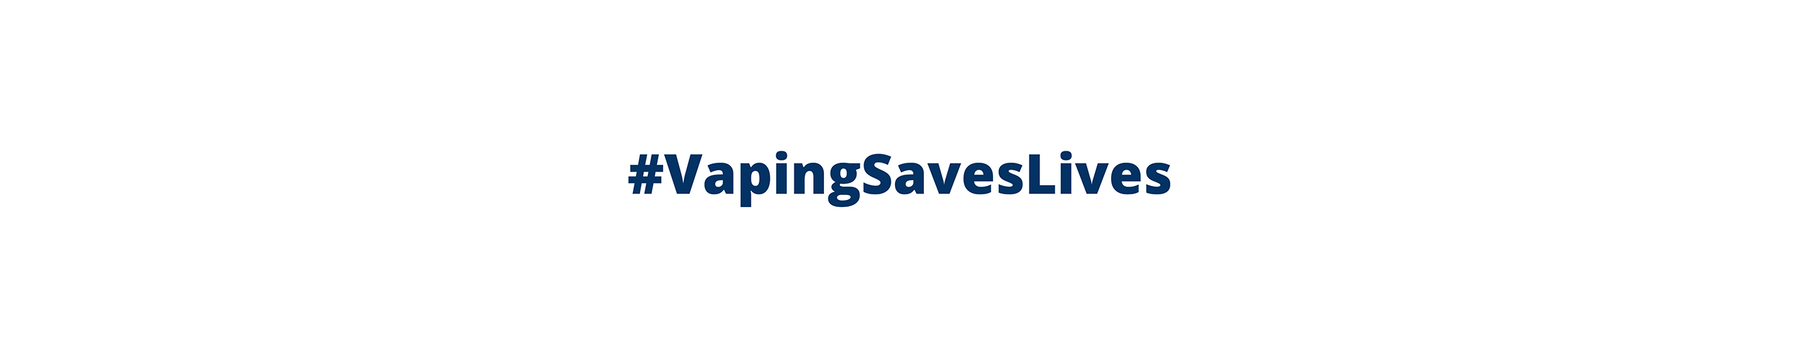 Vaping Saves Lives – An ITV Tonight correction